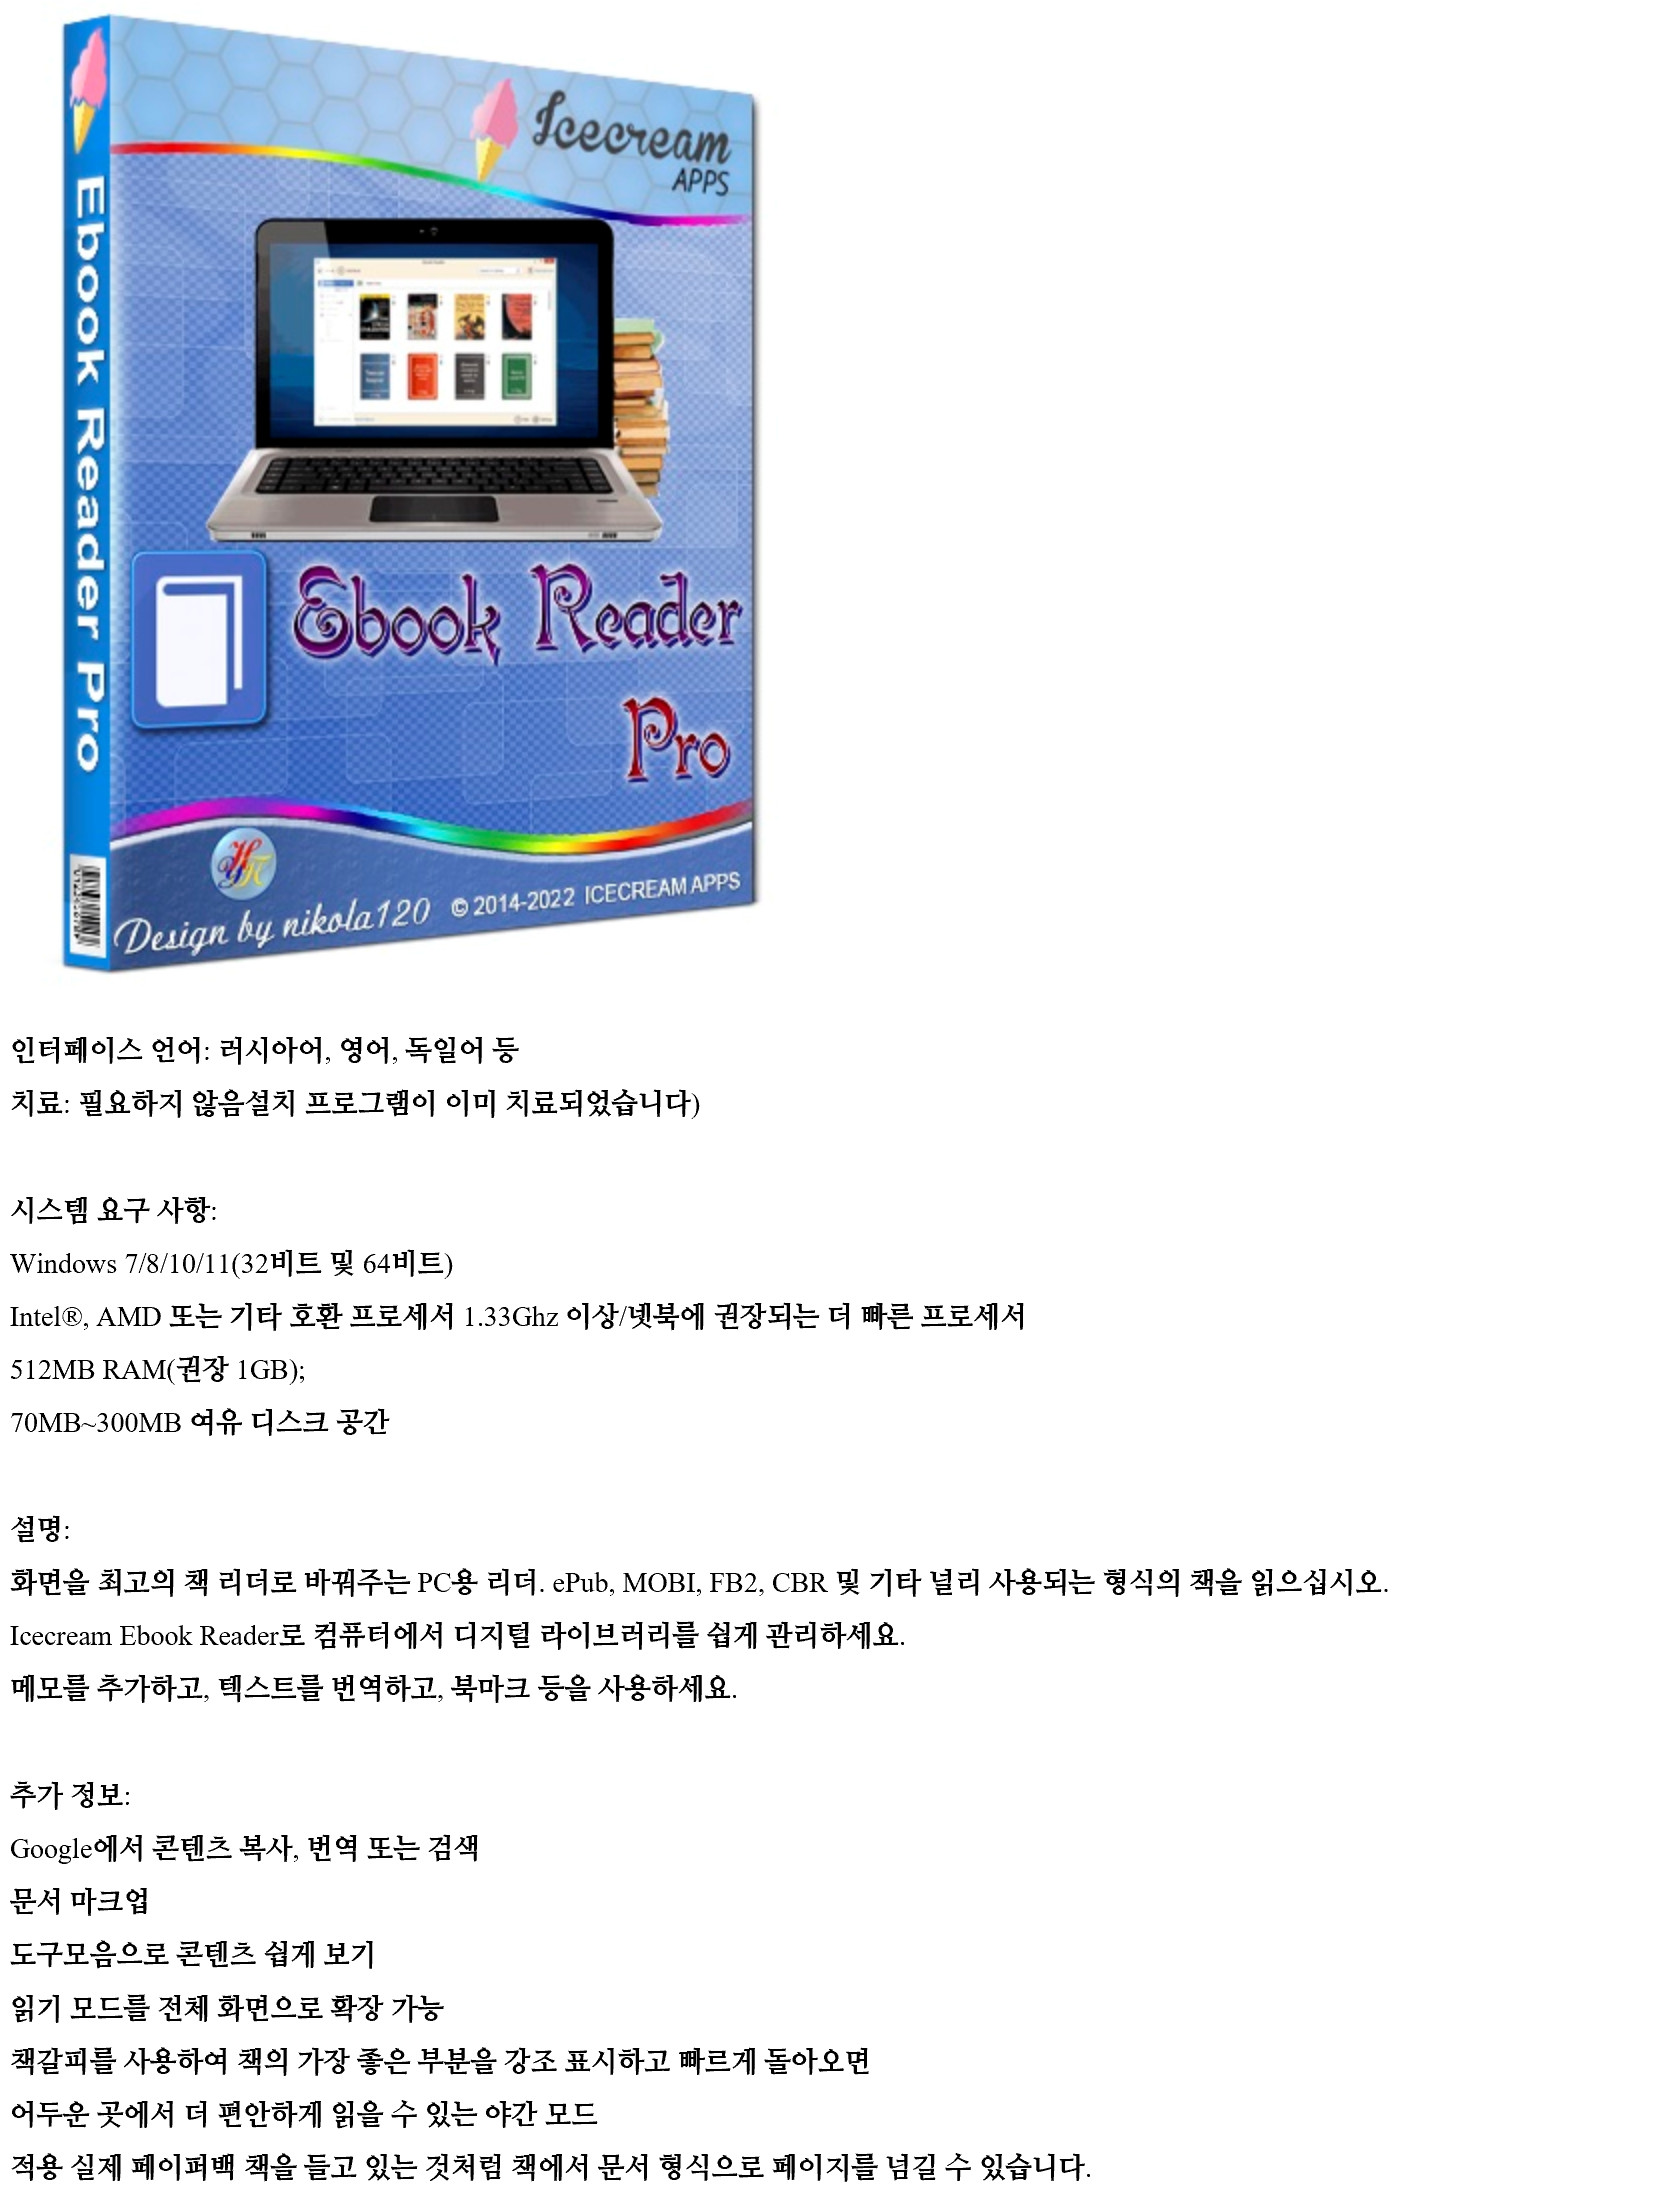 Icecream Ebook Reader.jpg